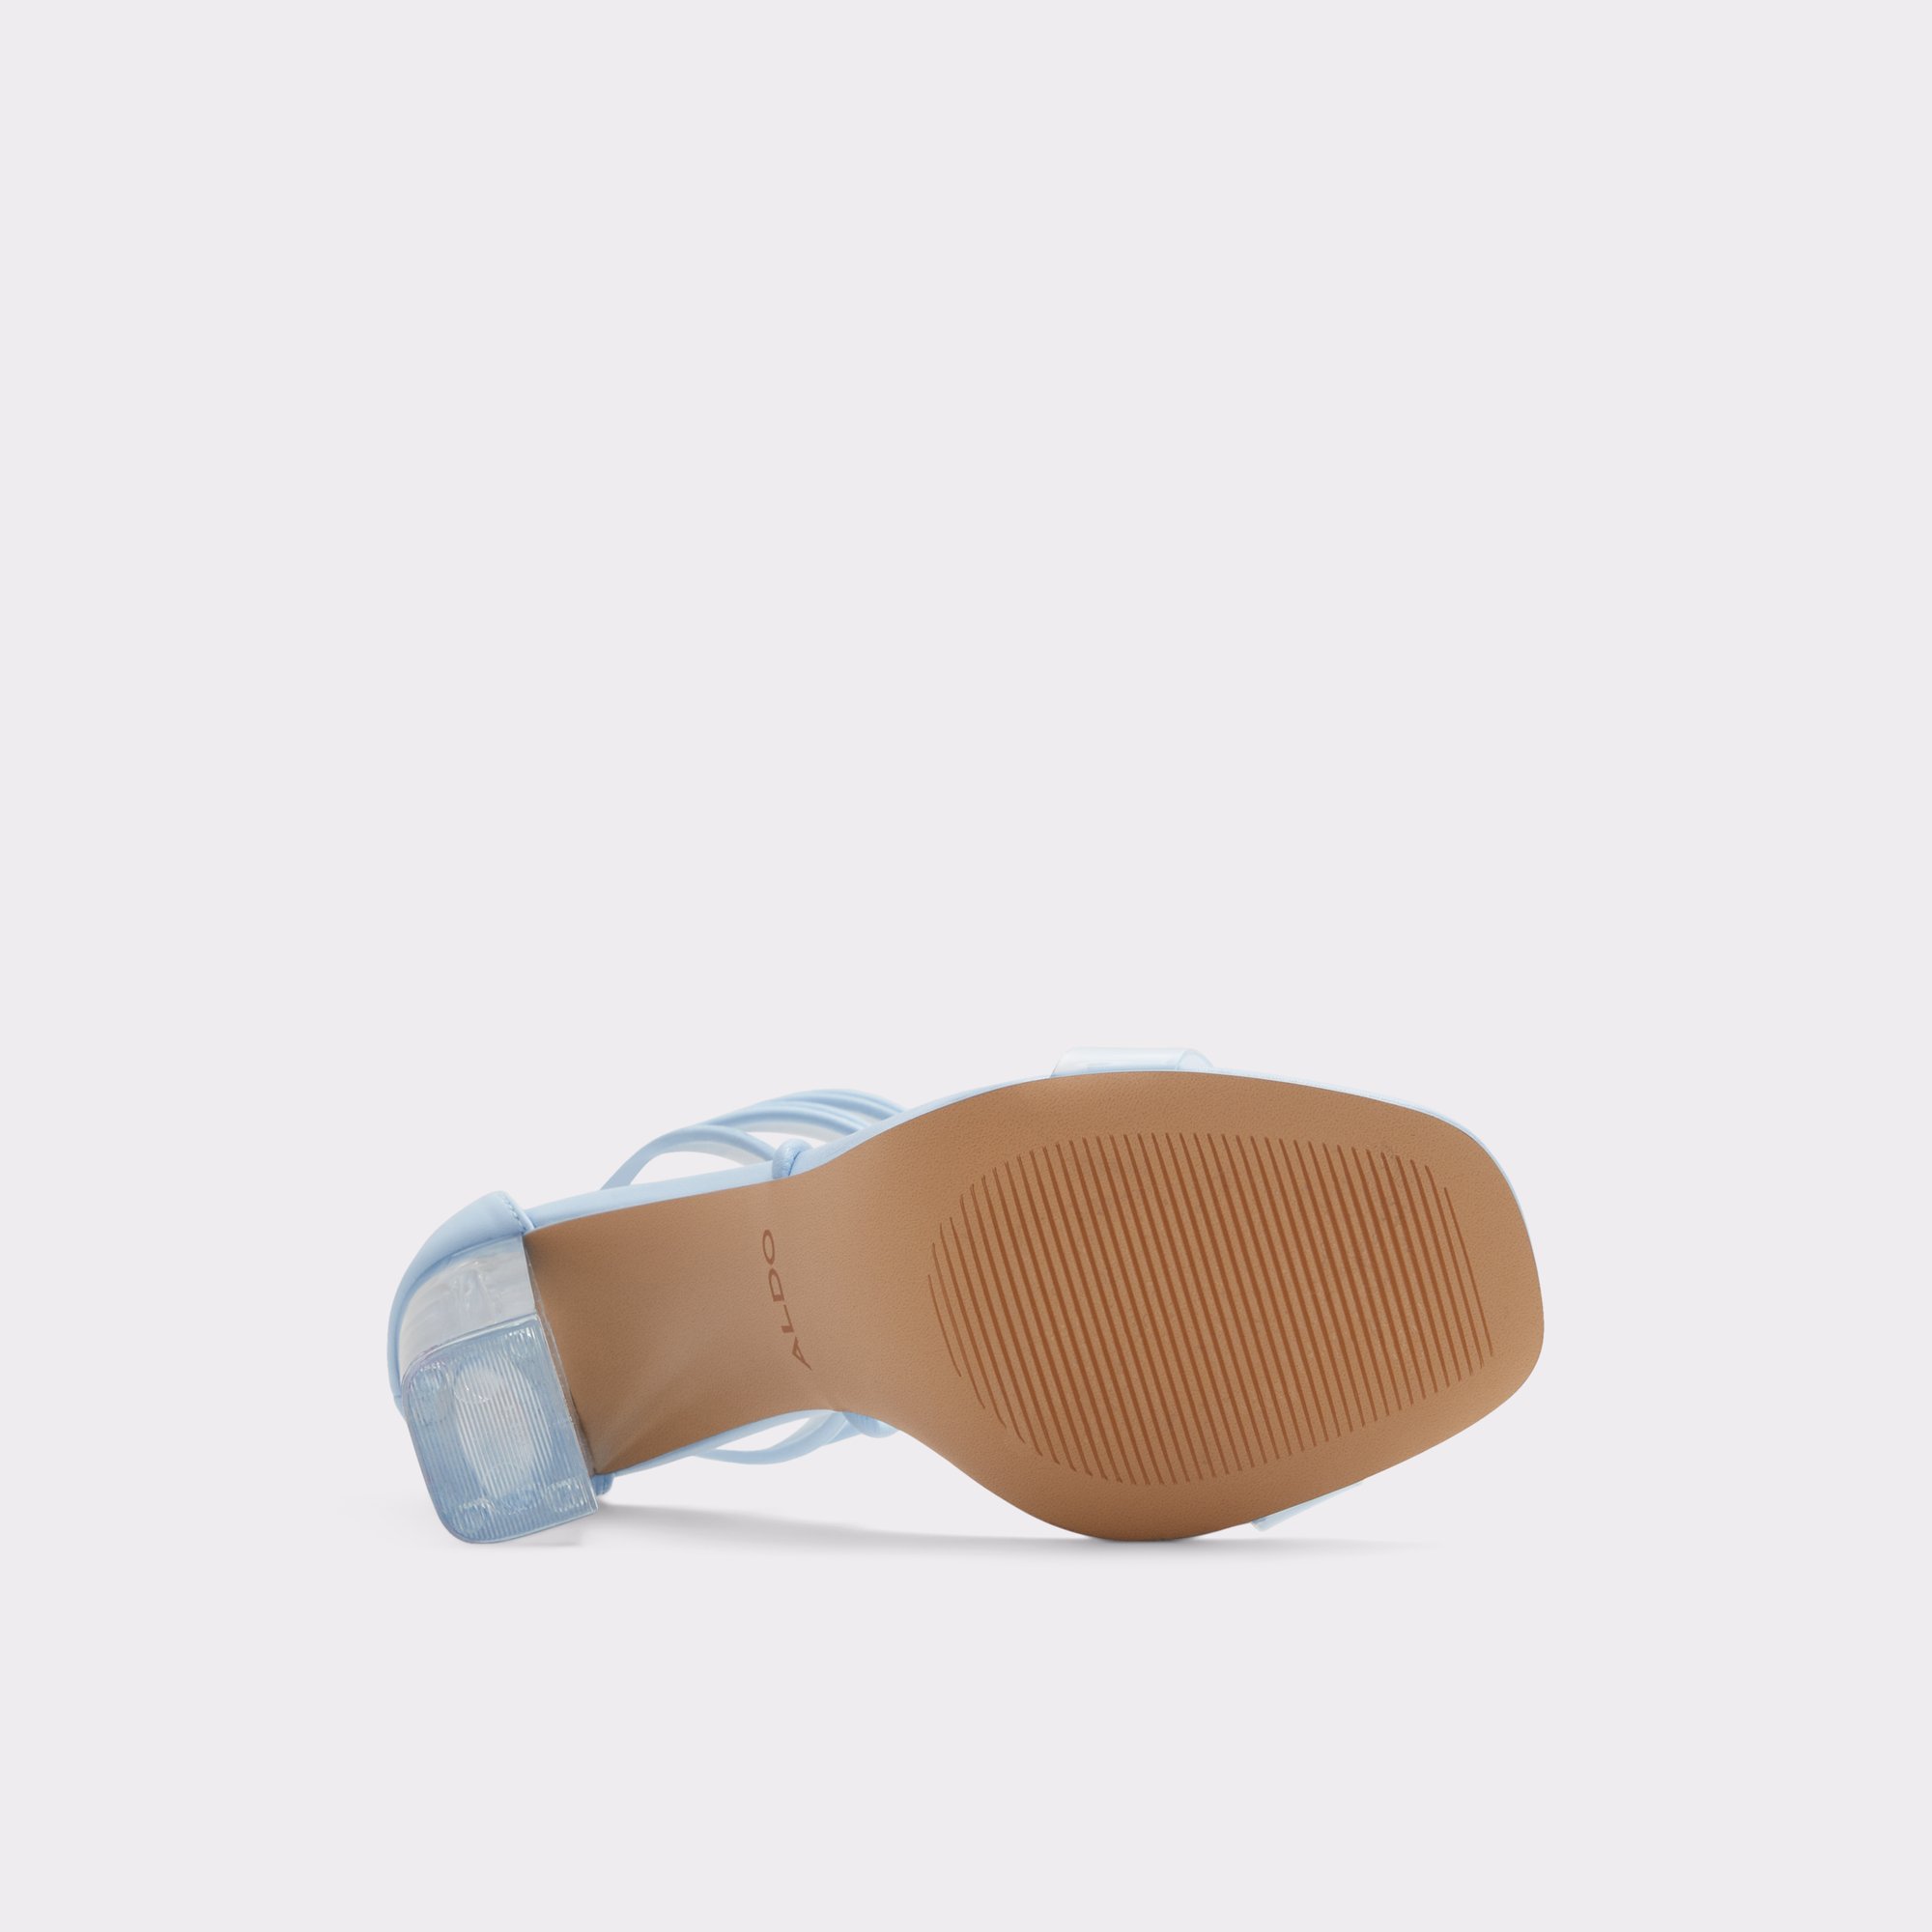 krybdyr underskud Atomisk Onardonia Blue Women's Strappy sandals | ALDO US